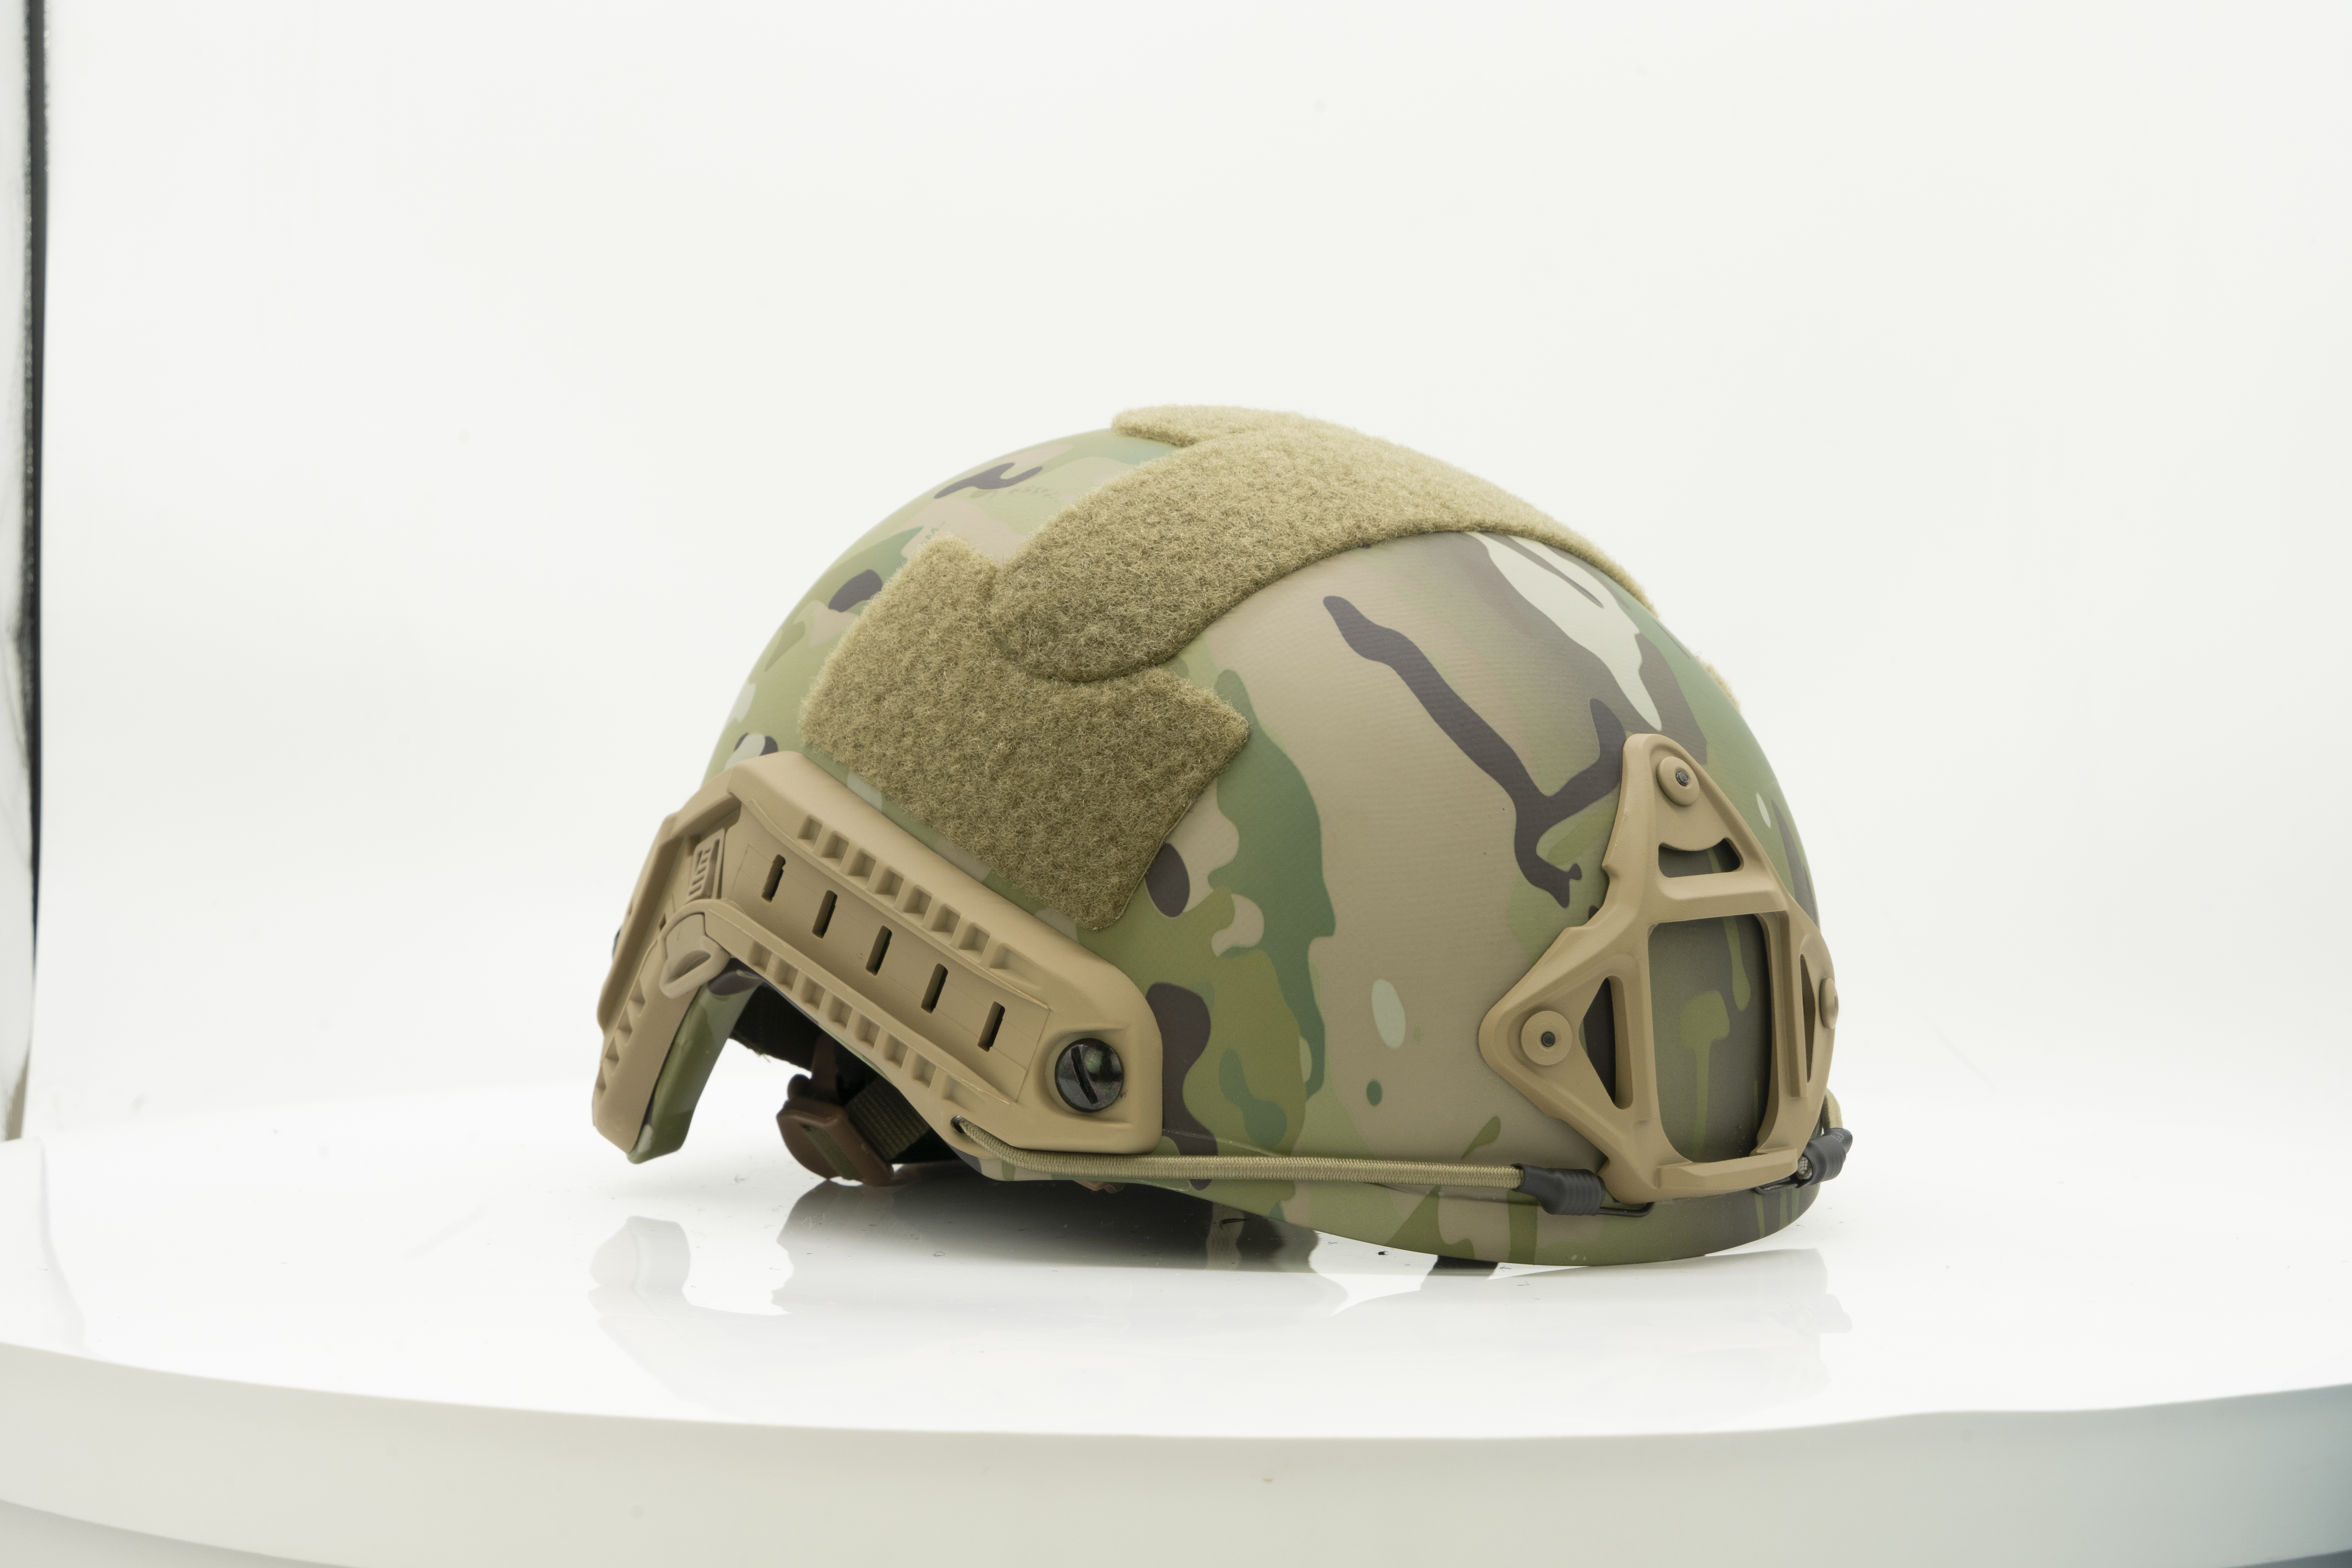 Ballistic Military and Law Enforcement Helmet 7.62x51mm Rifle Protection Full-Cut Helmets